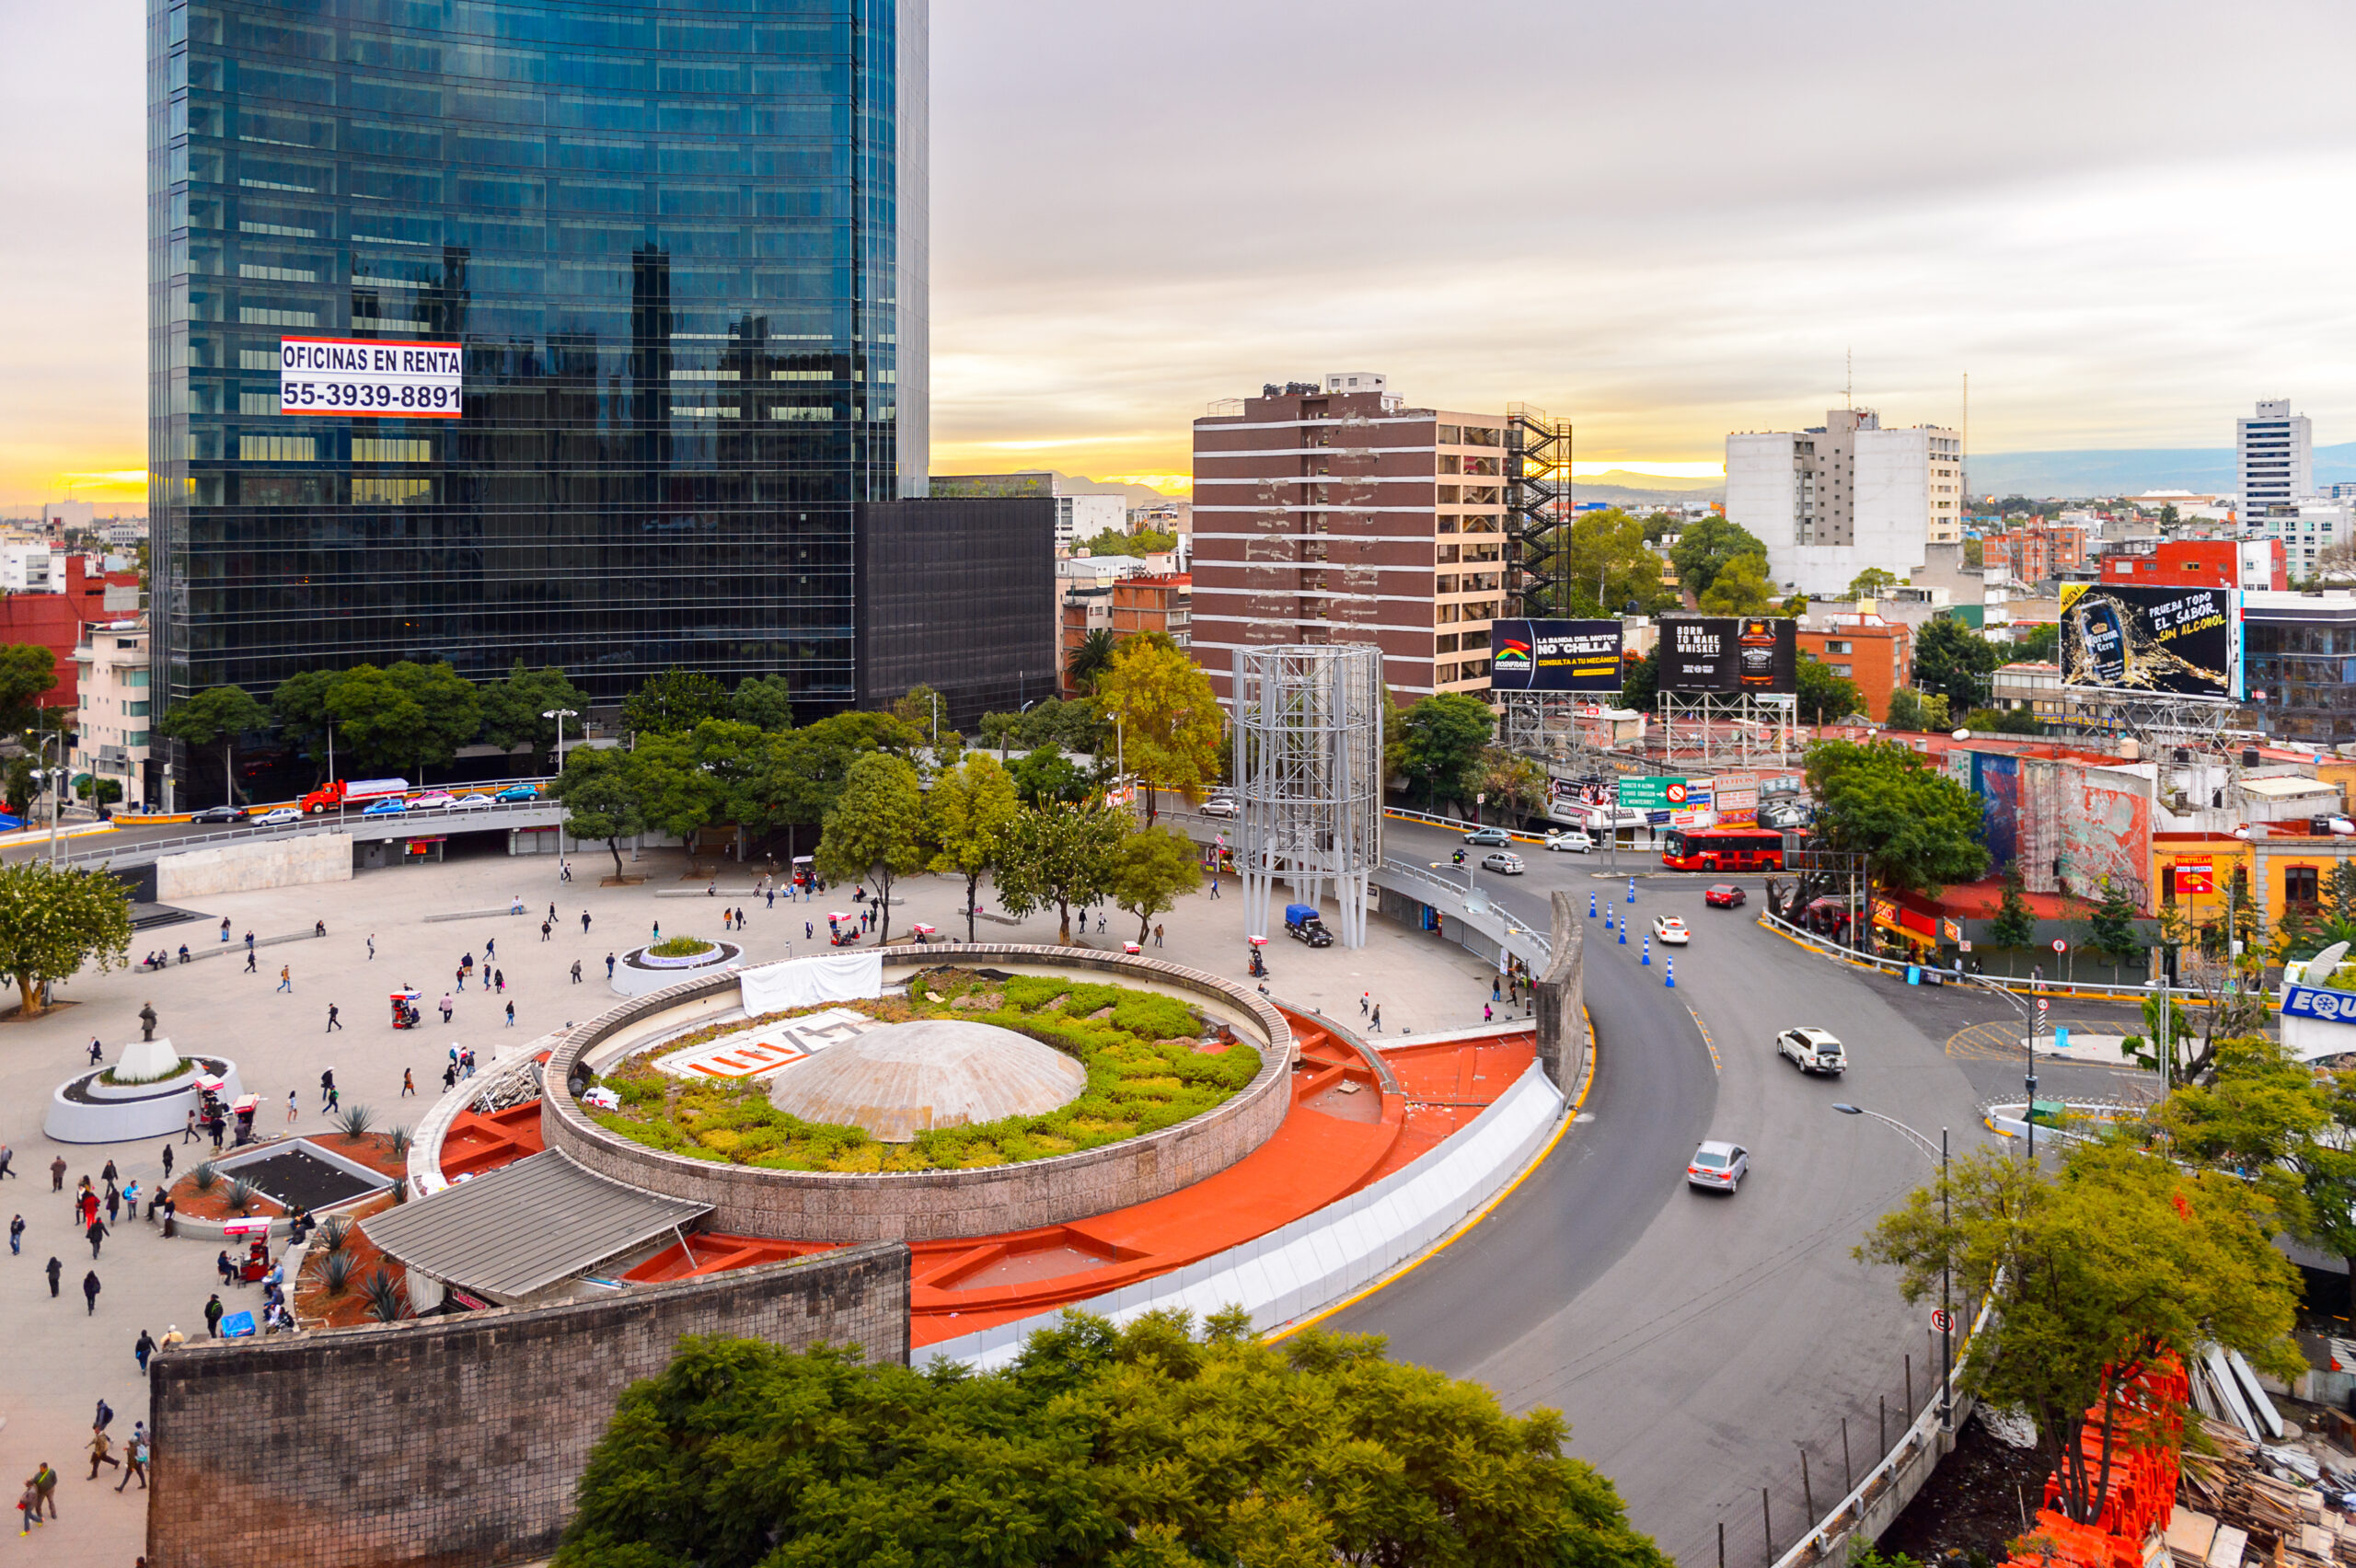 Architecture of Zone Rosa neighborhood in Mexico City (Photo Credit: Anton_Ivanov / Shutterstock)